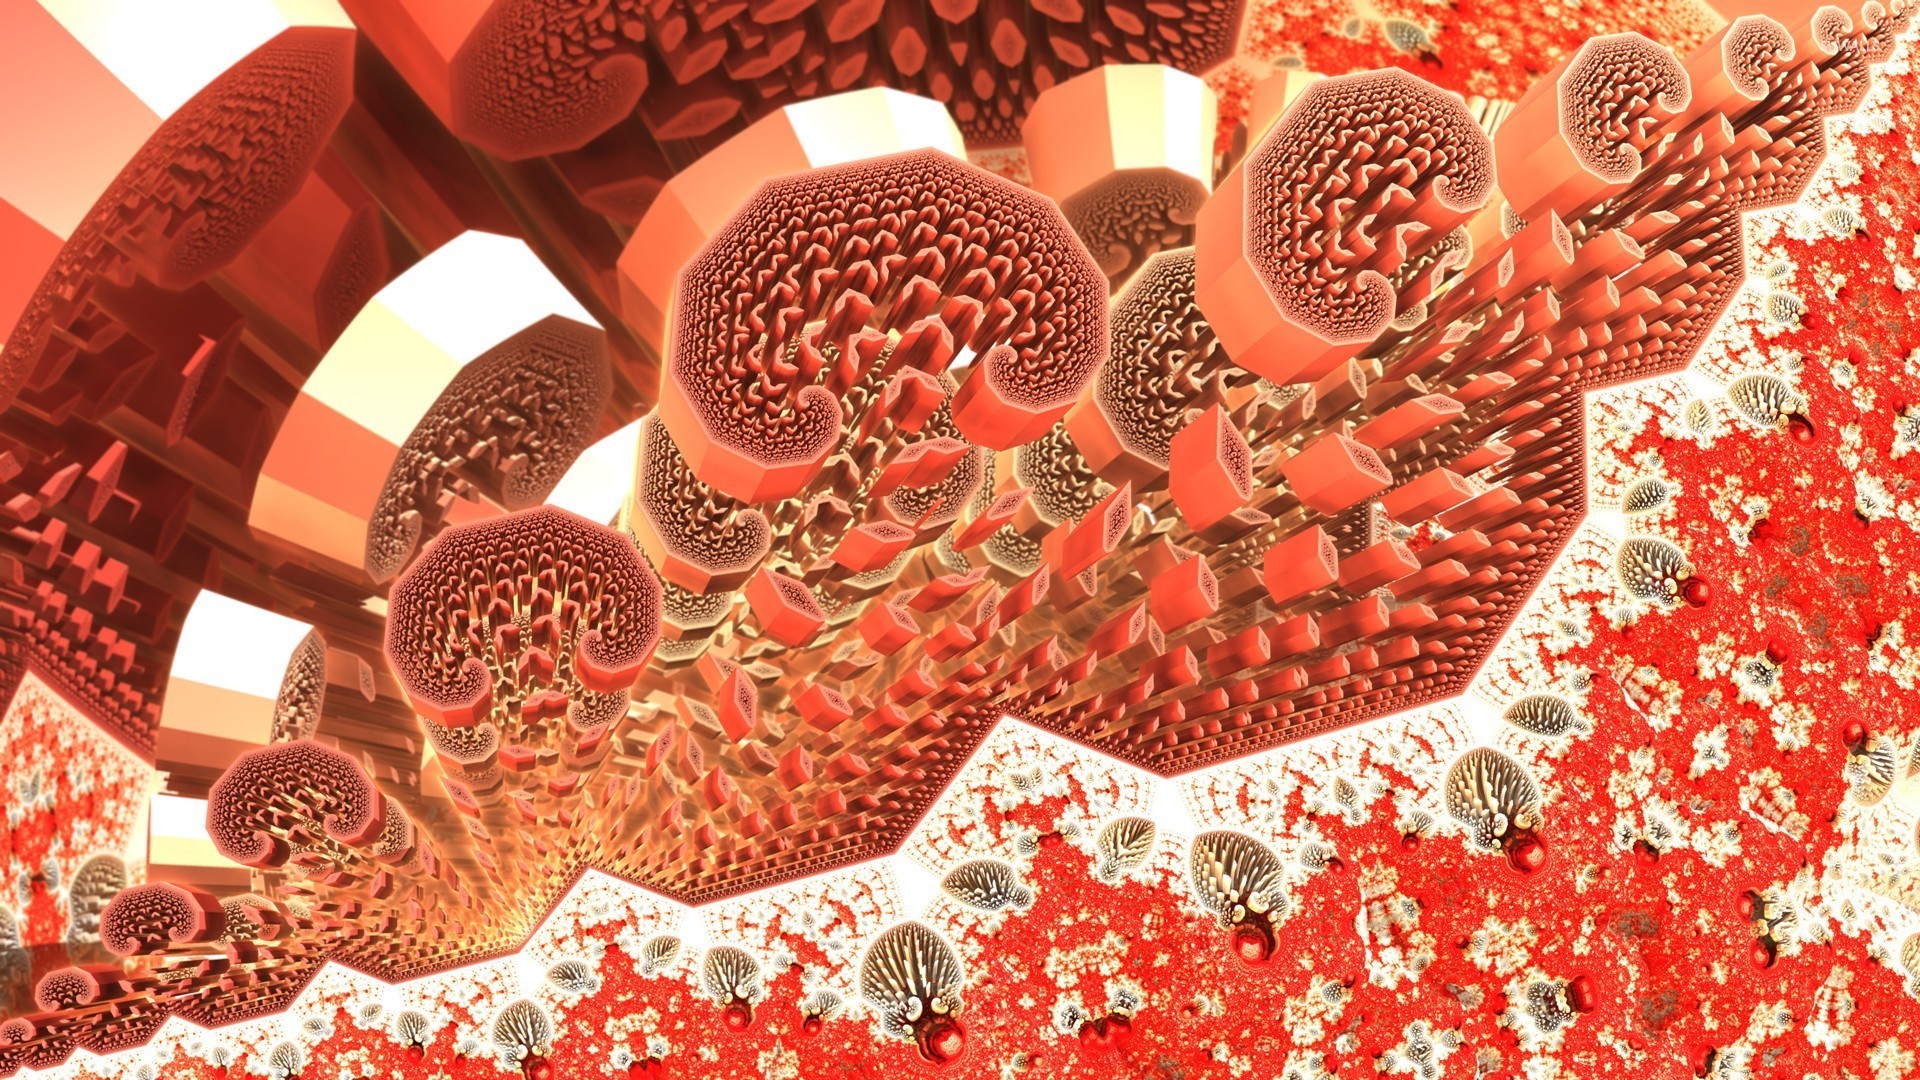 Blood Cells Live Wallpaper Youtube - Fractals In Blood Cells - HD Wallpaper 